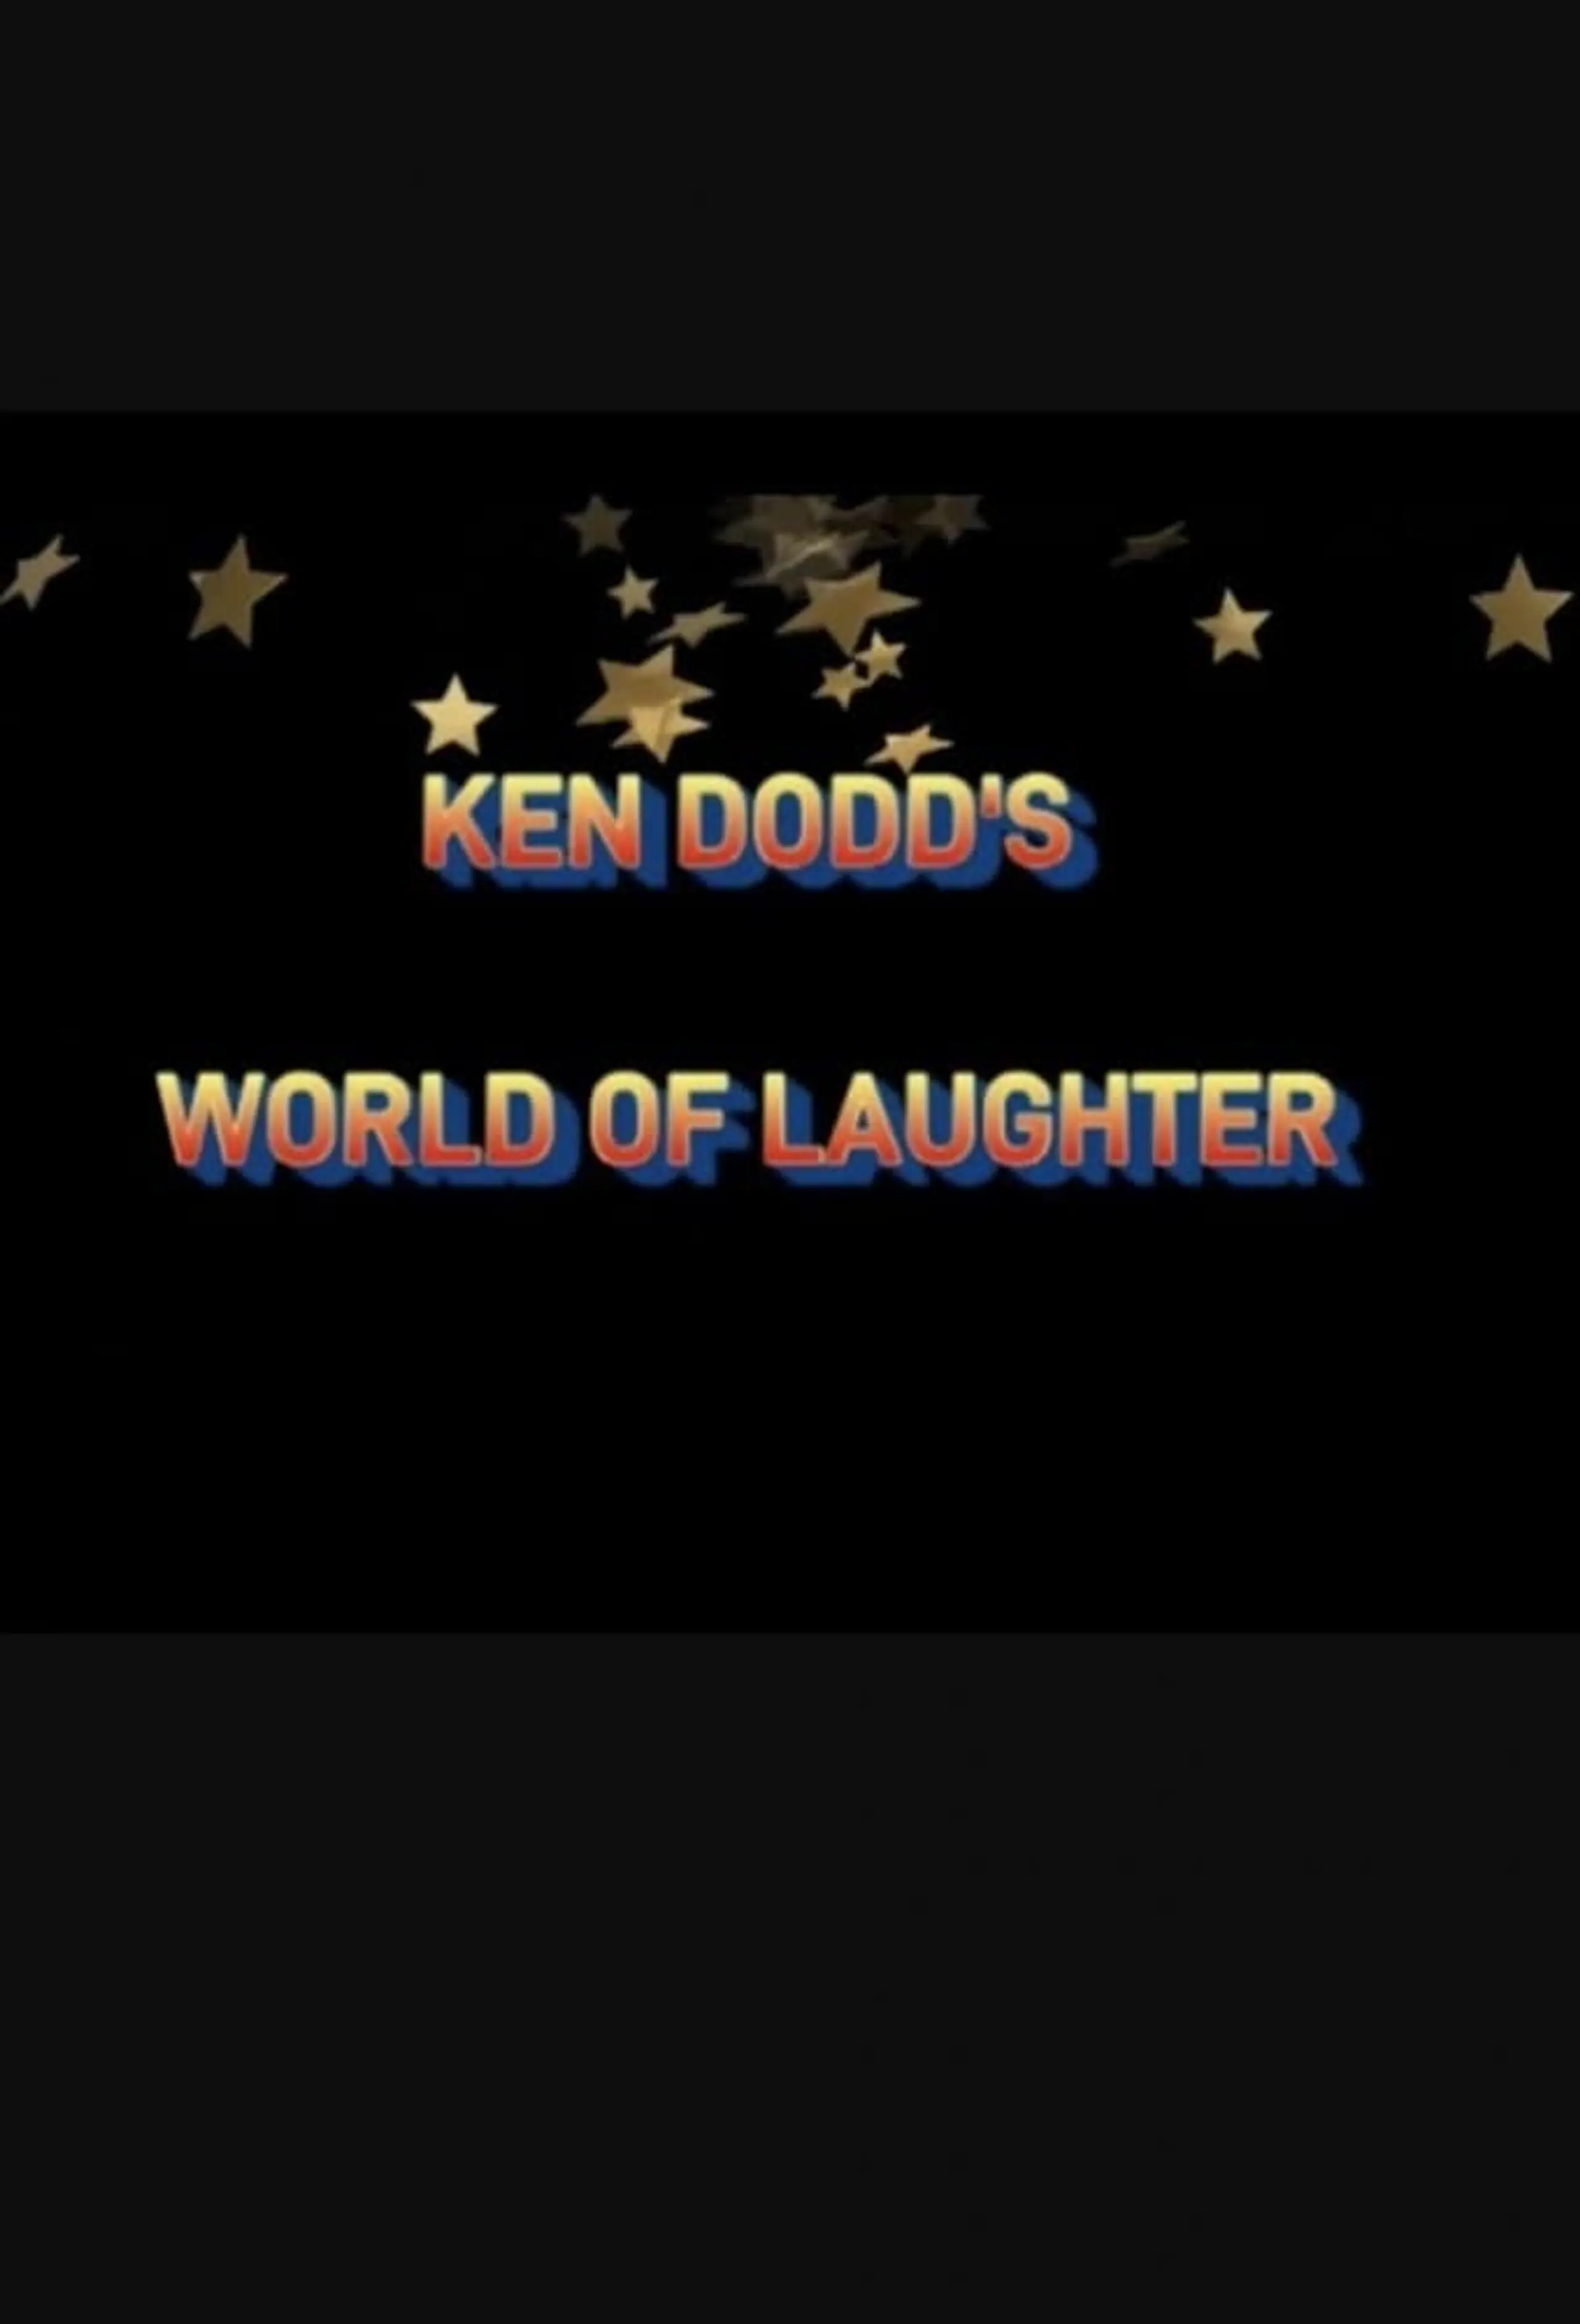 Ken Dodd's World of Laughter